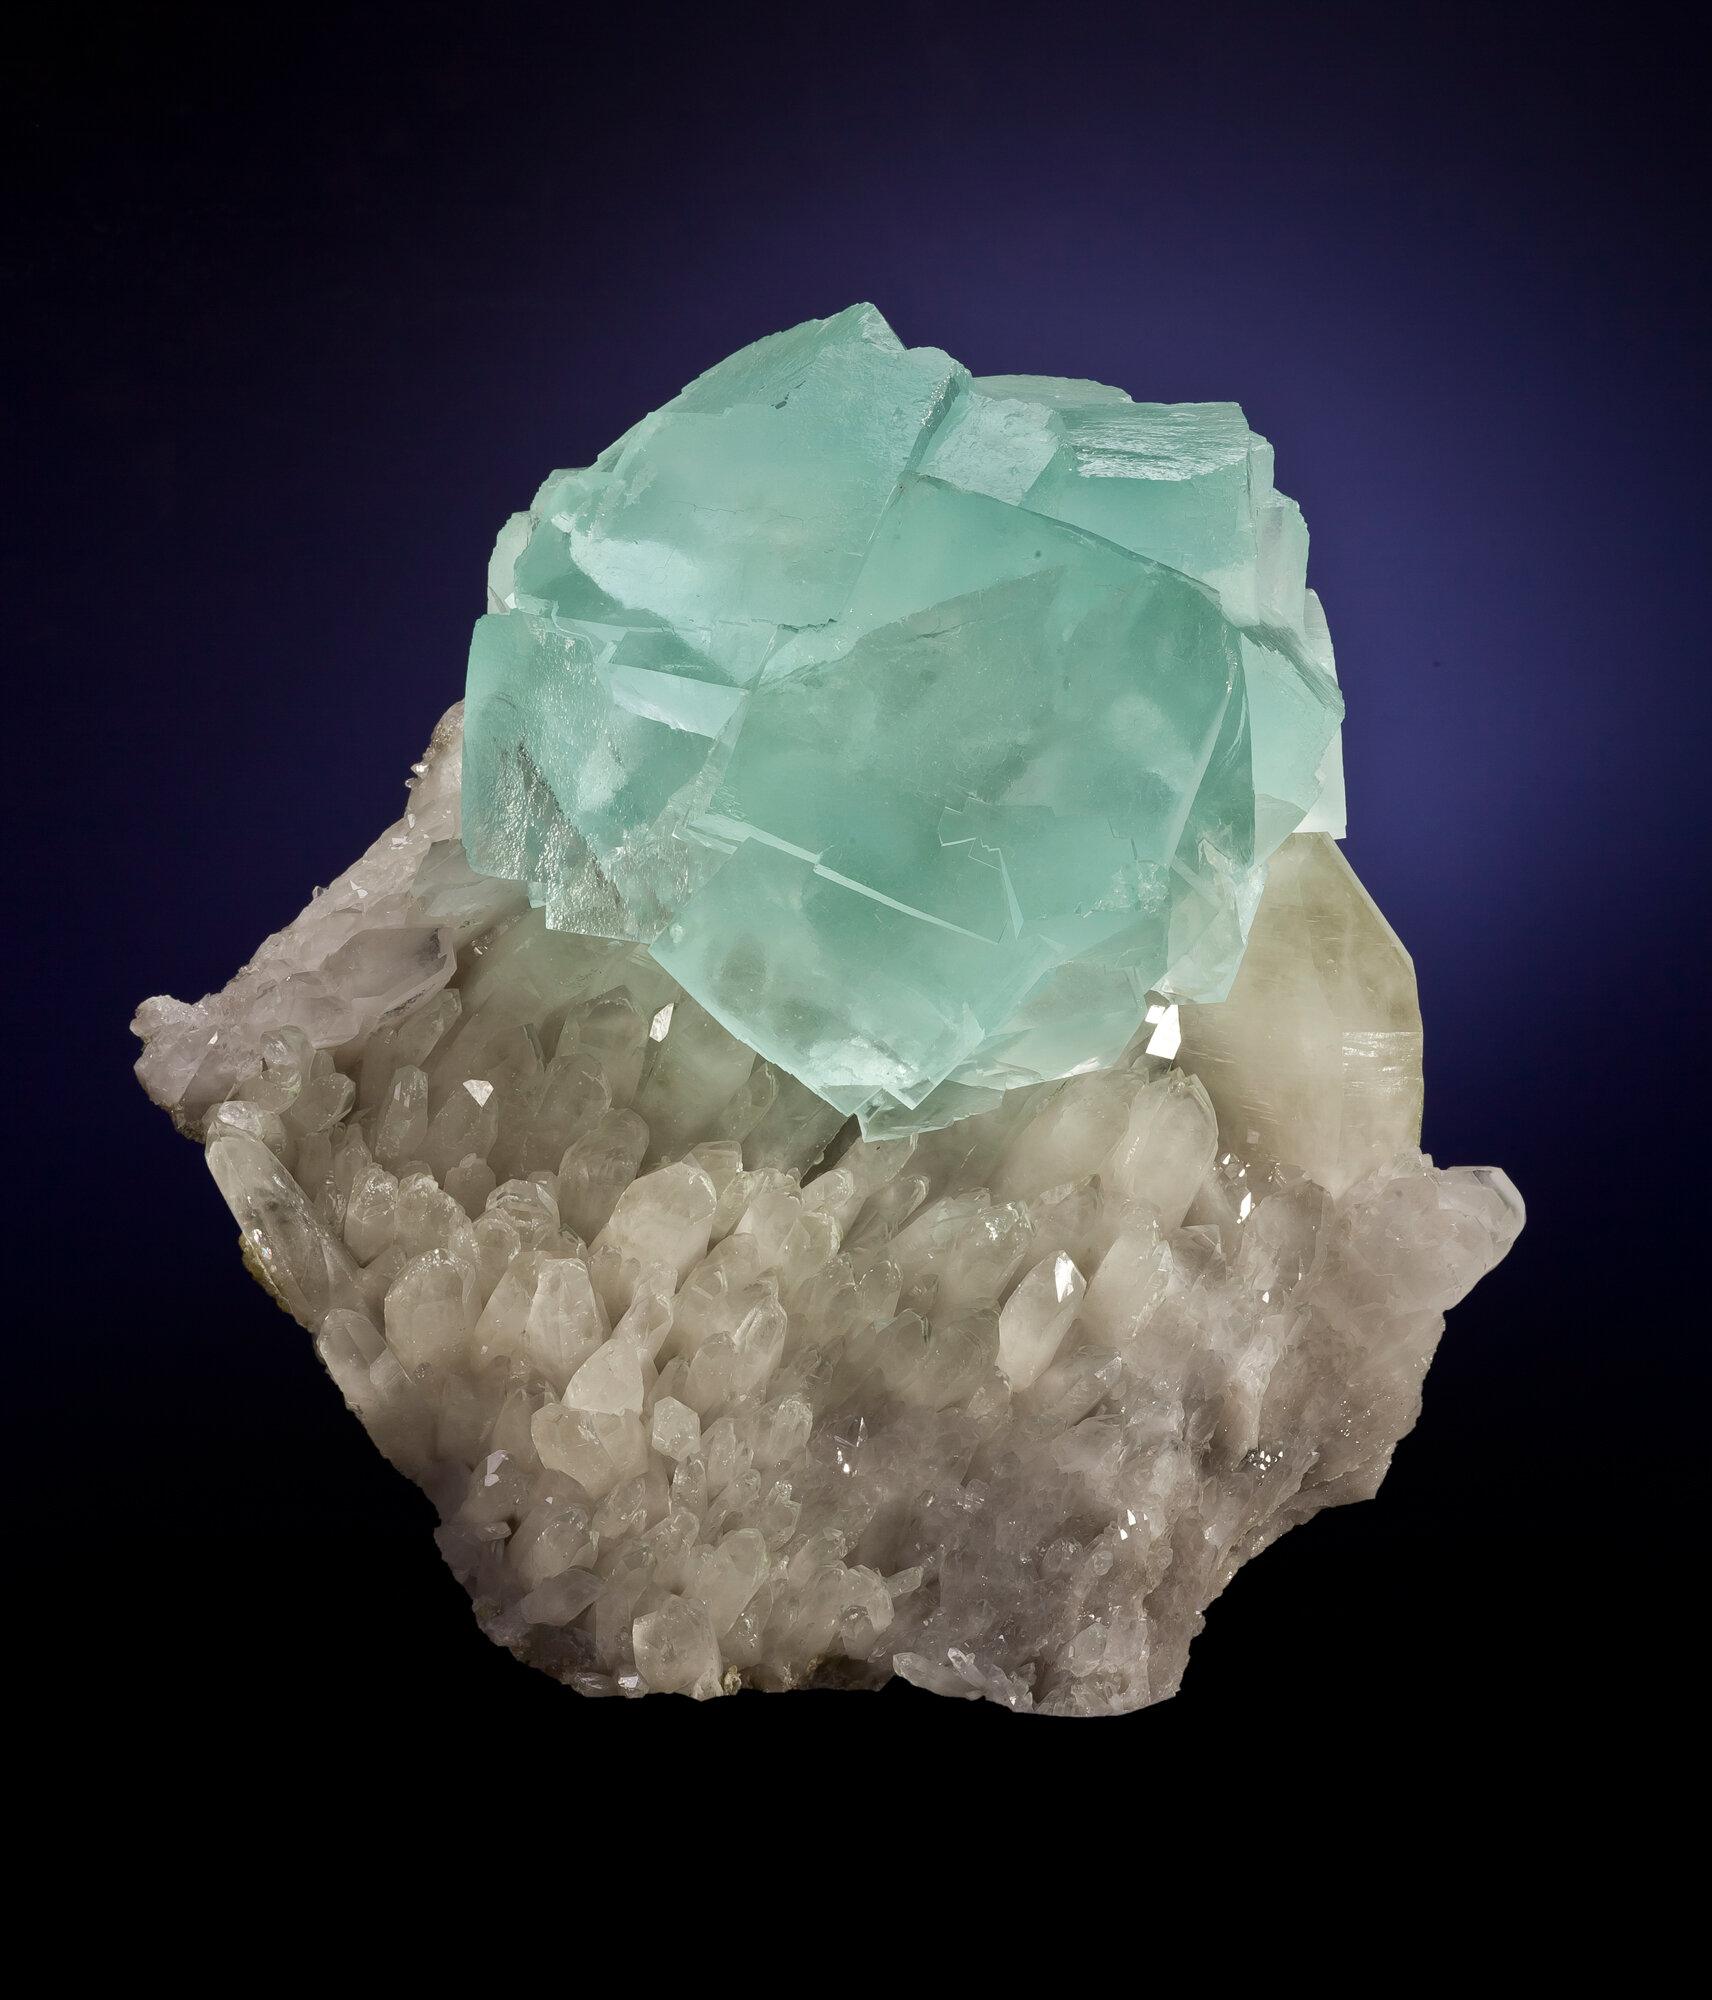  Fluorite on quartz, Yaogangxian mine, Yizhang co., Chenzhou pref., China - 31cm 